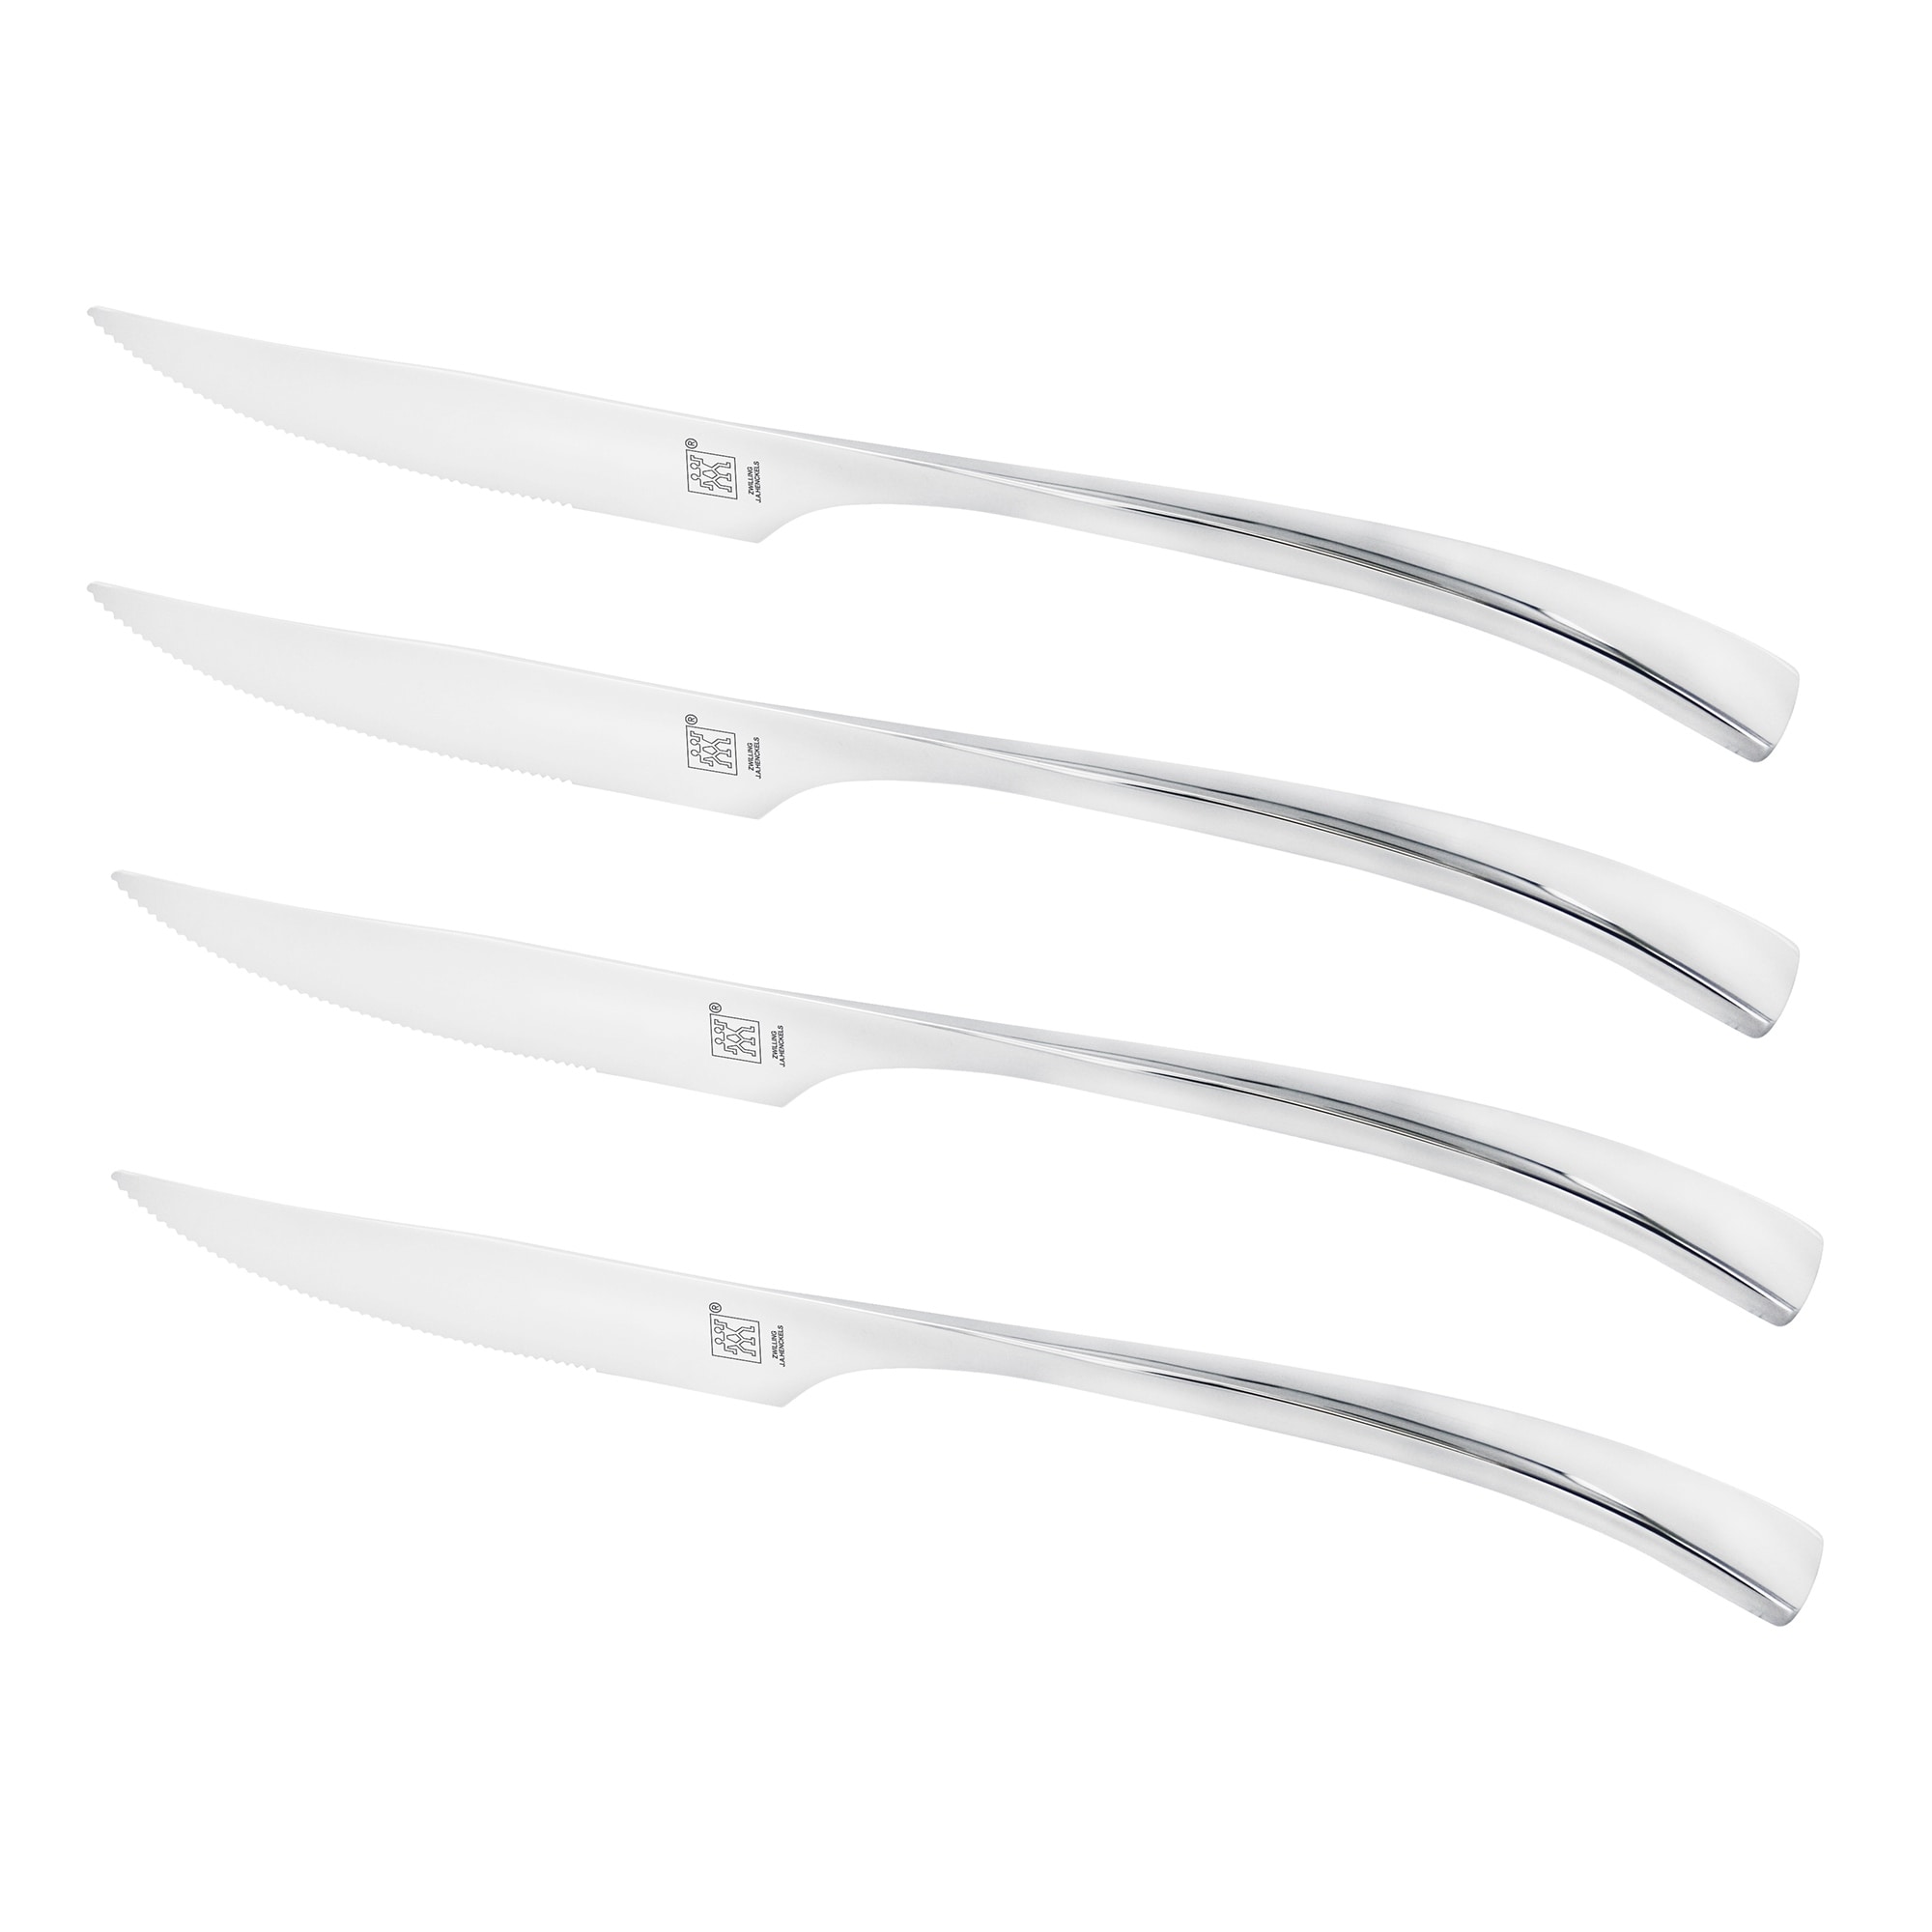 Zwilling Stainless-Steel Dinner Steak Knives and Forks, Set of 12